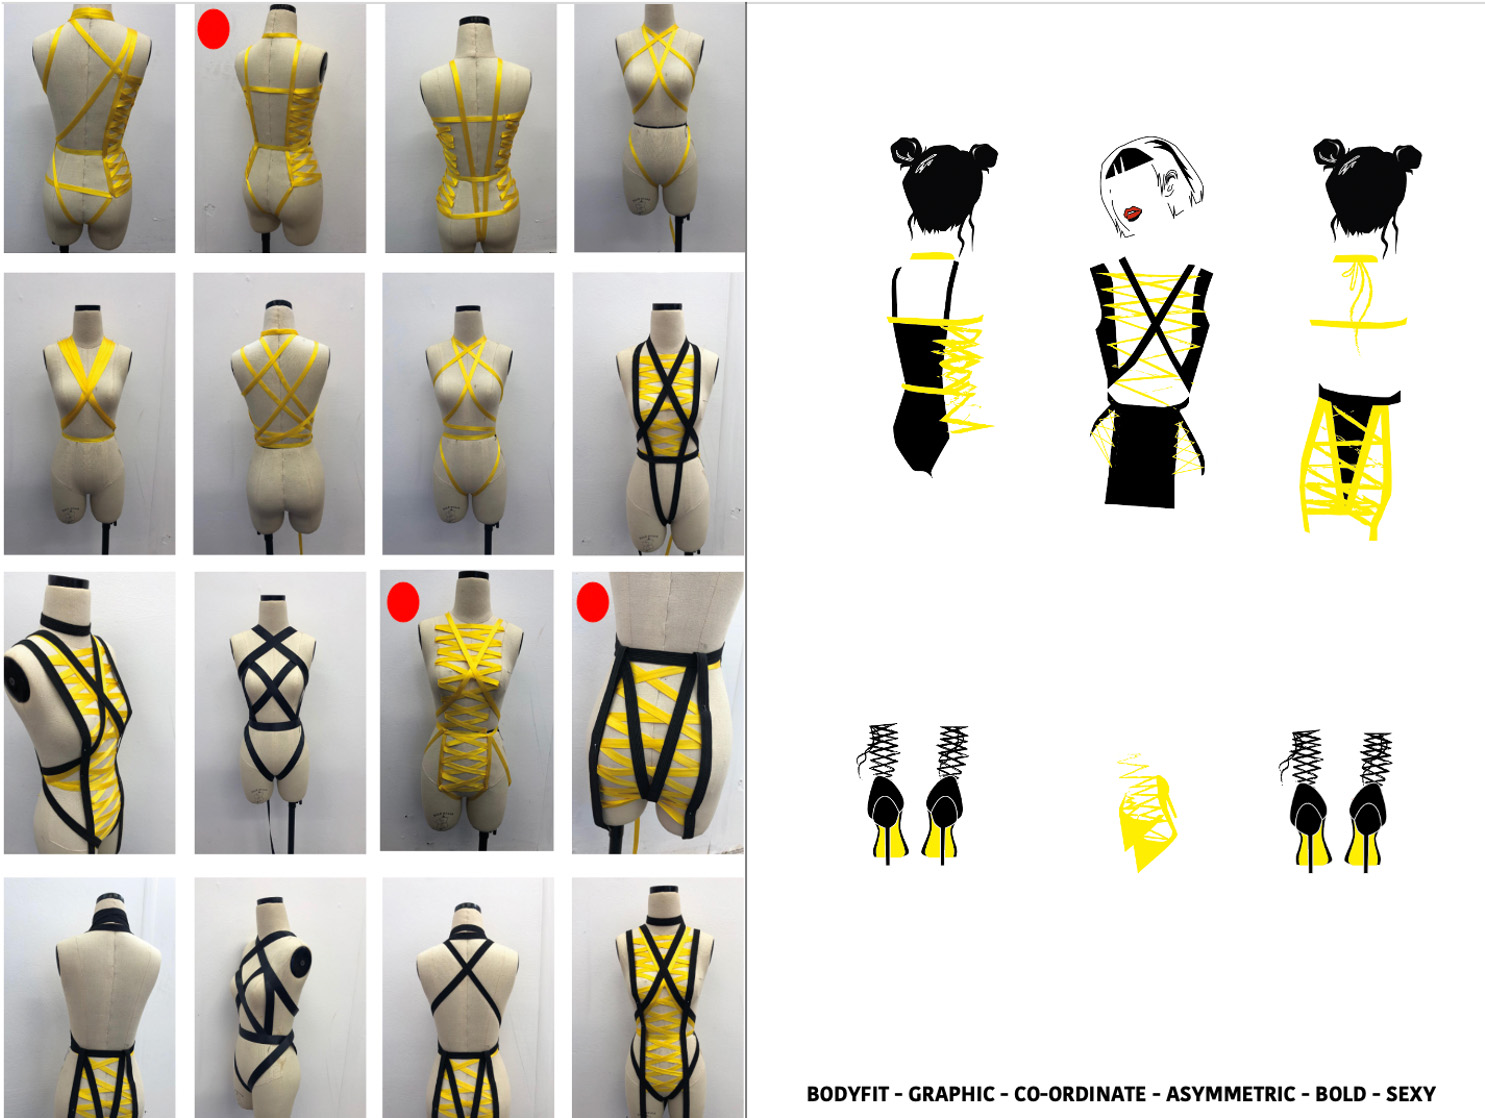 Fashion illustration and design development work